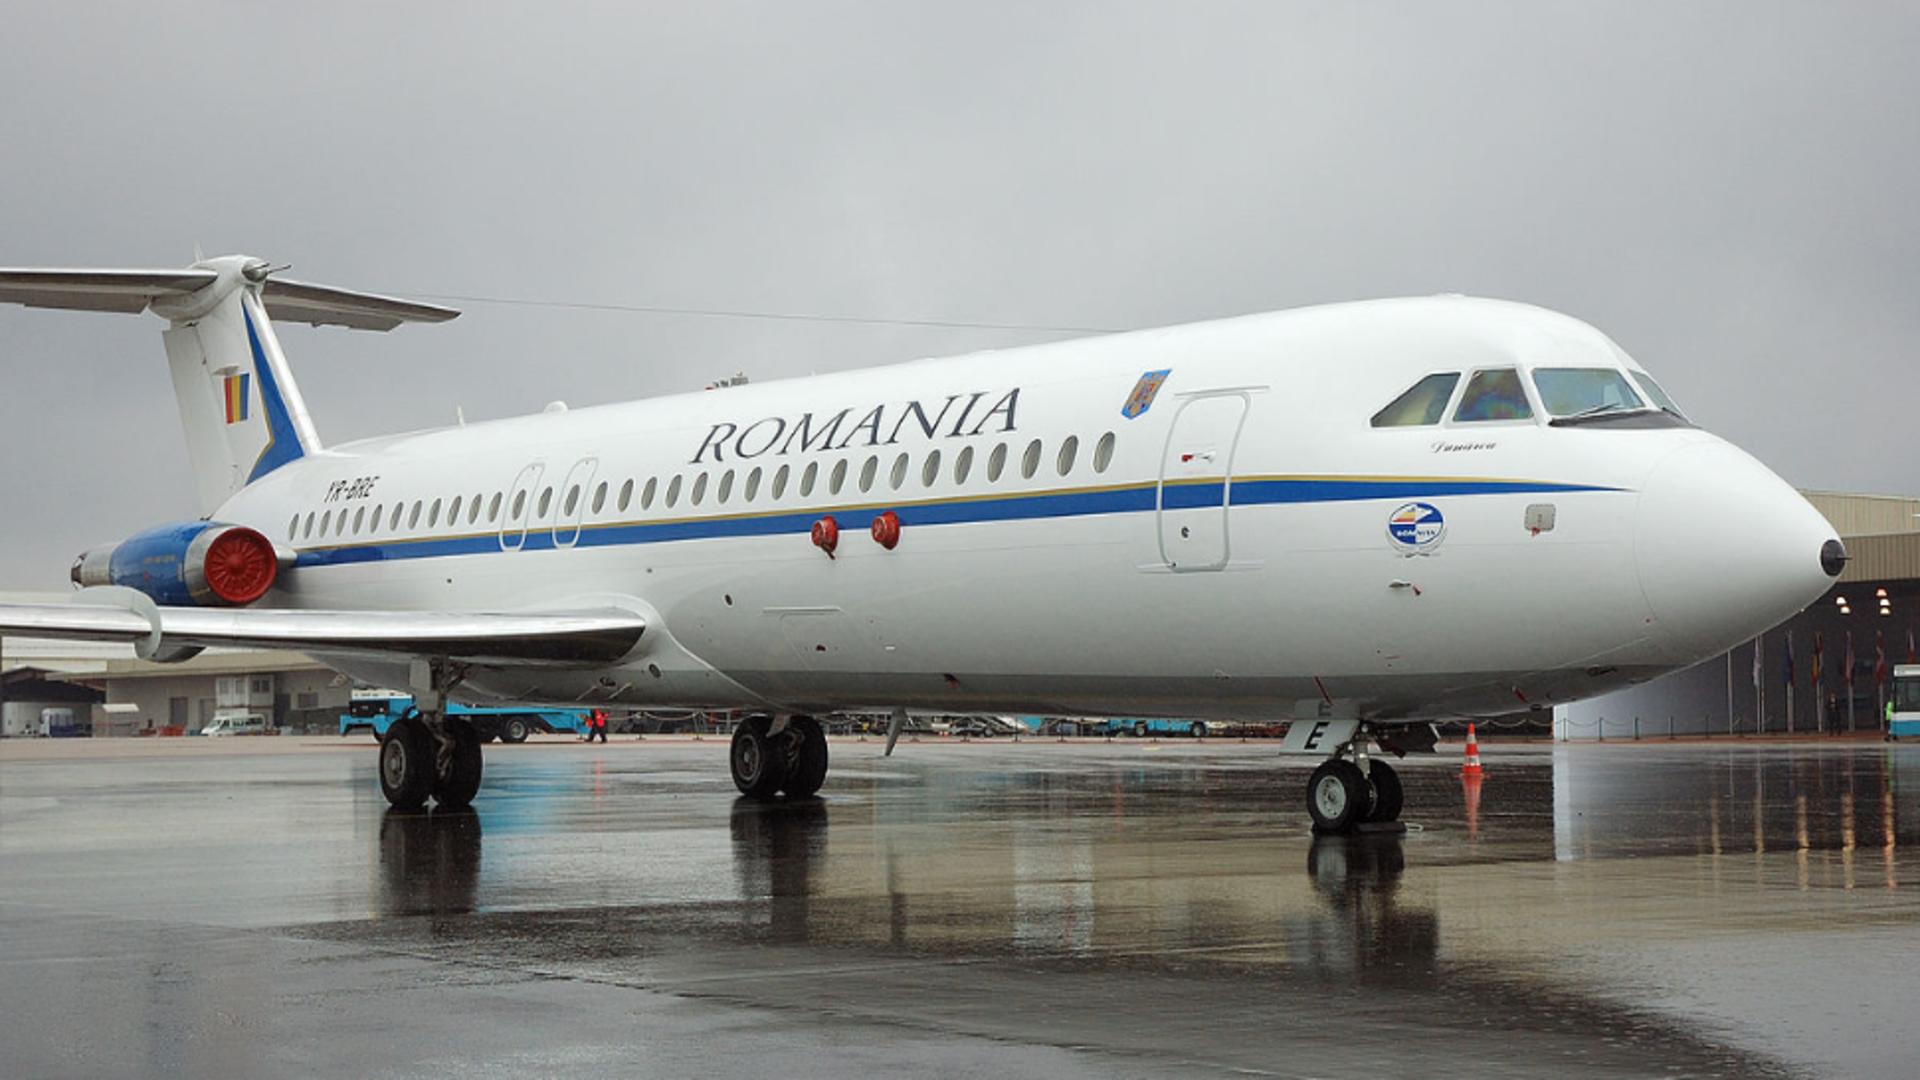 Aeronava Romania